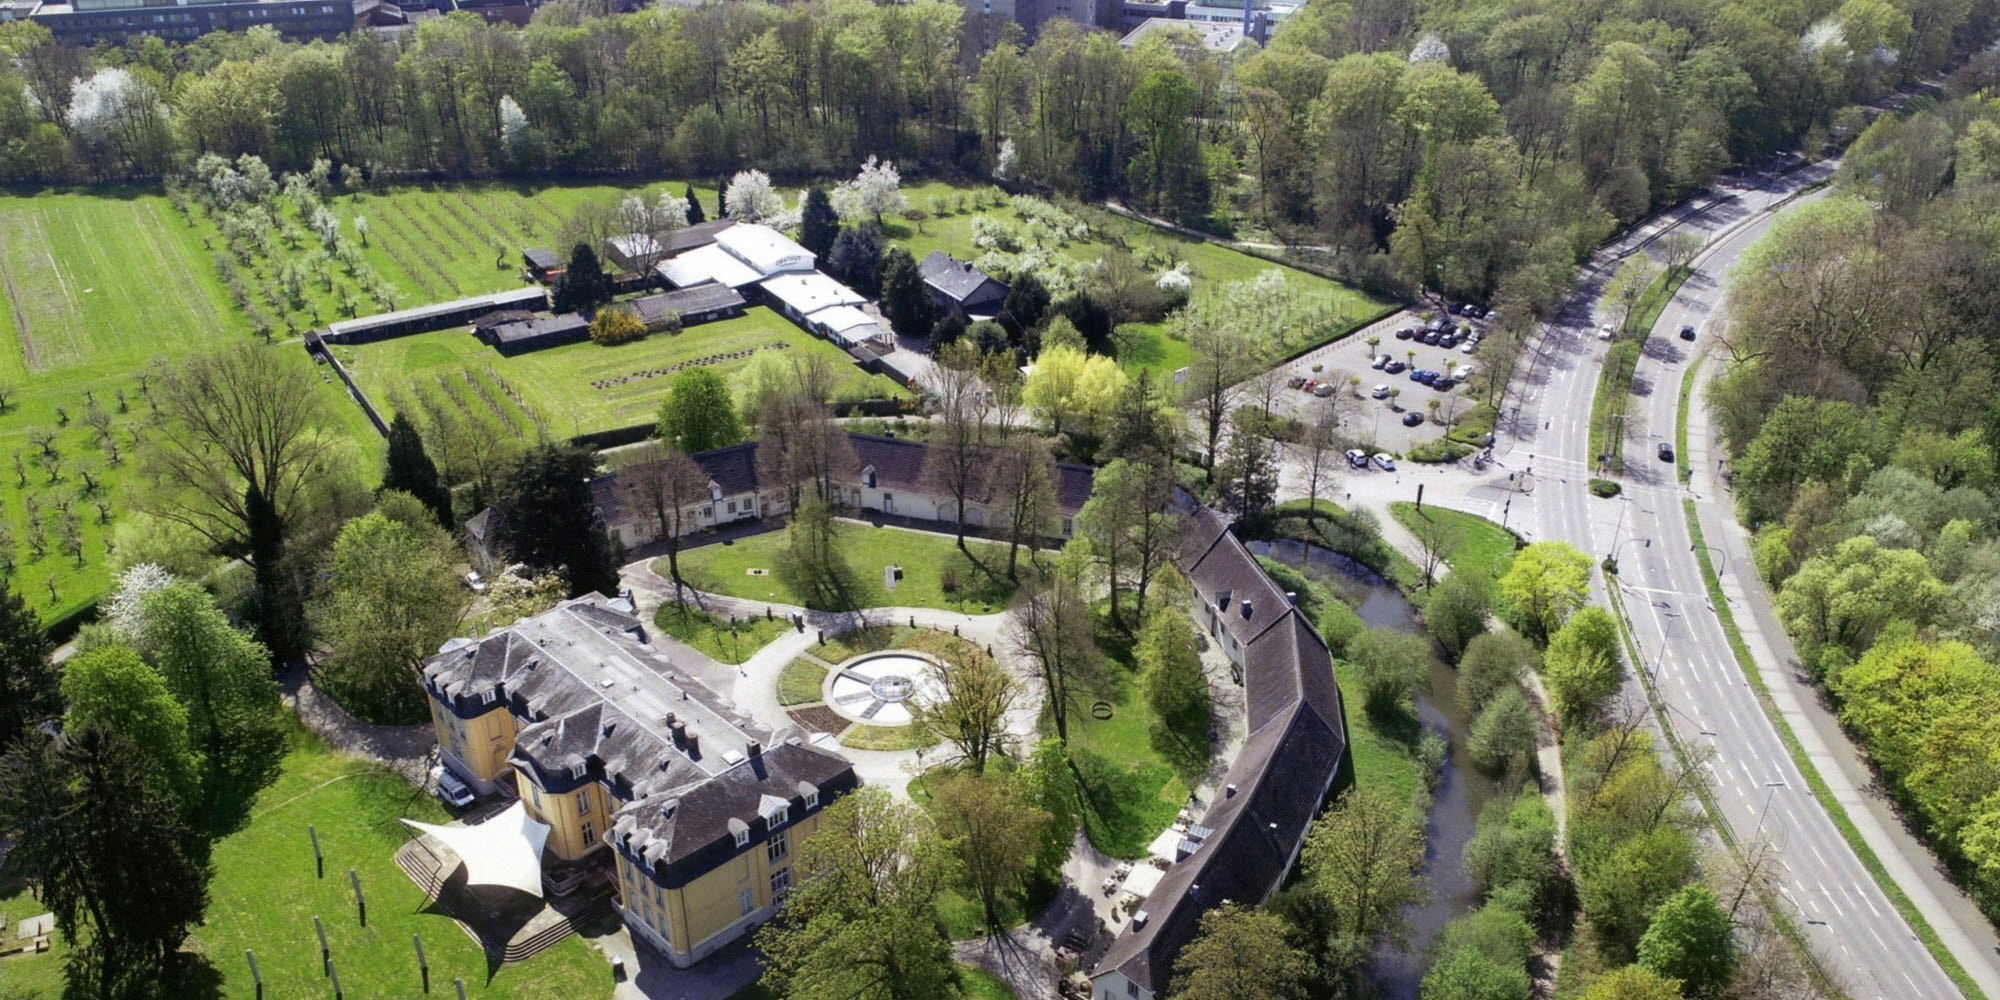 Schloss Morsbroich aus der Drohnenperspektive ziert den Titel des neuen Schlebusch-Kalenders.